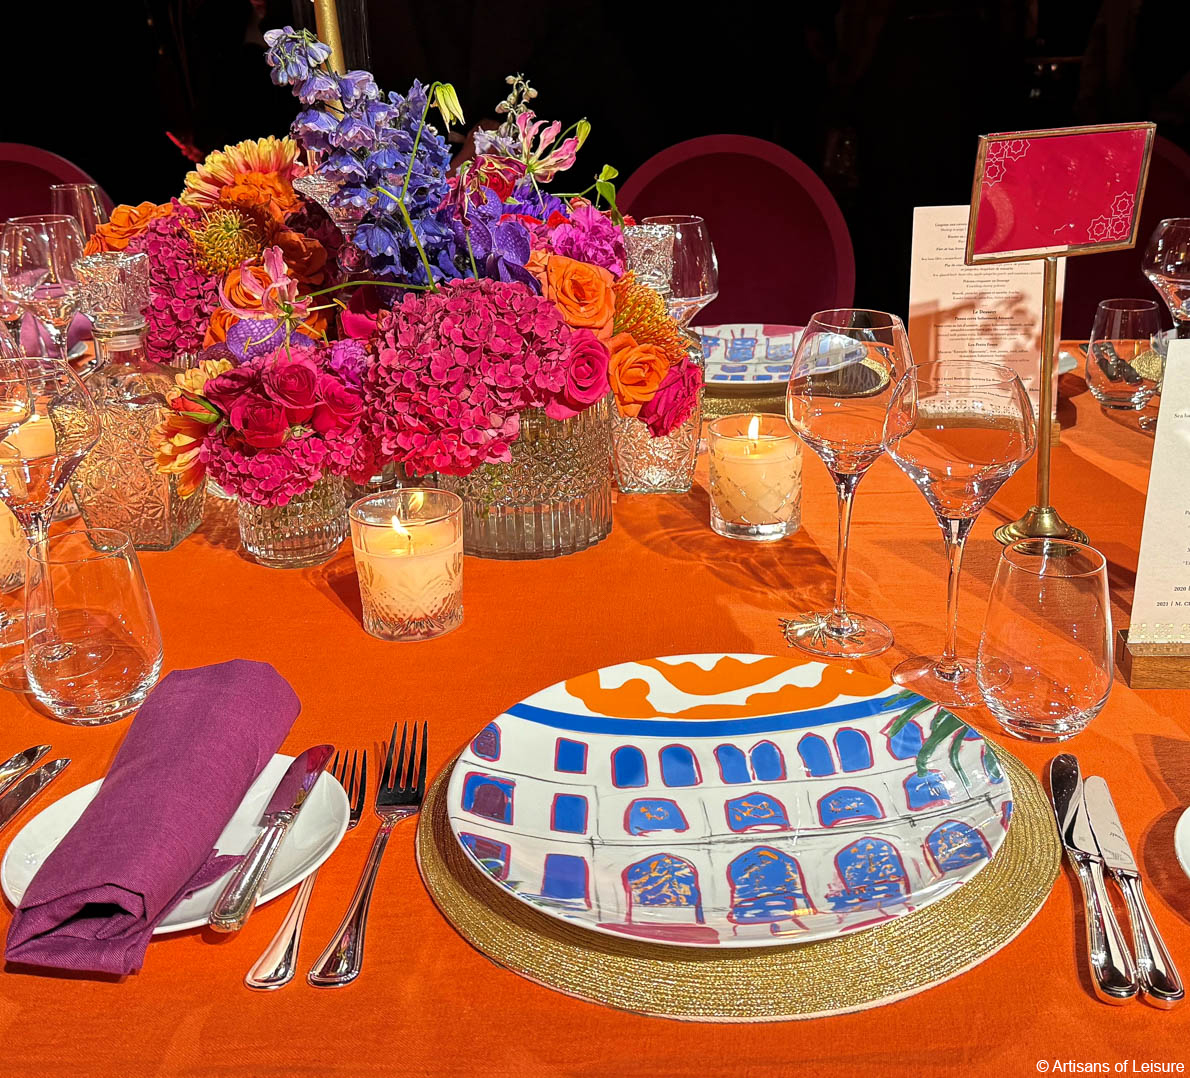 The beautiful table setting at La Mamounia’s 100th anniversary dinner